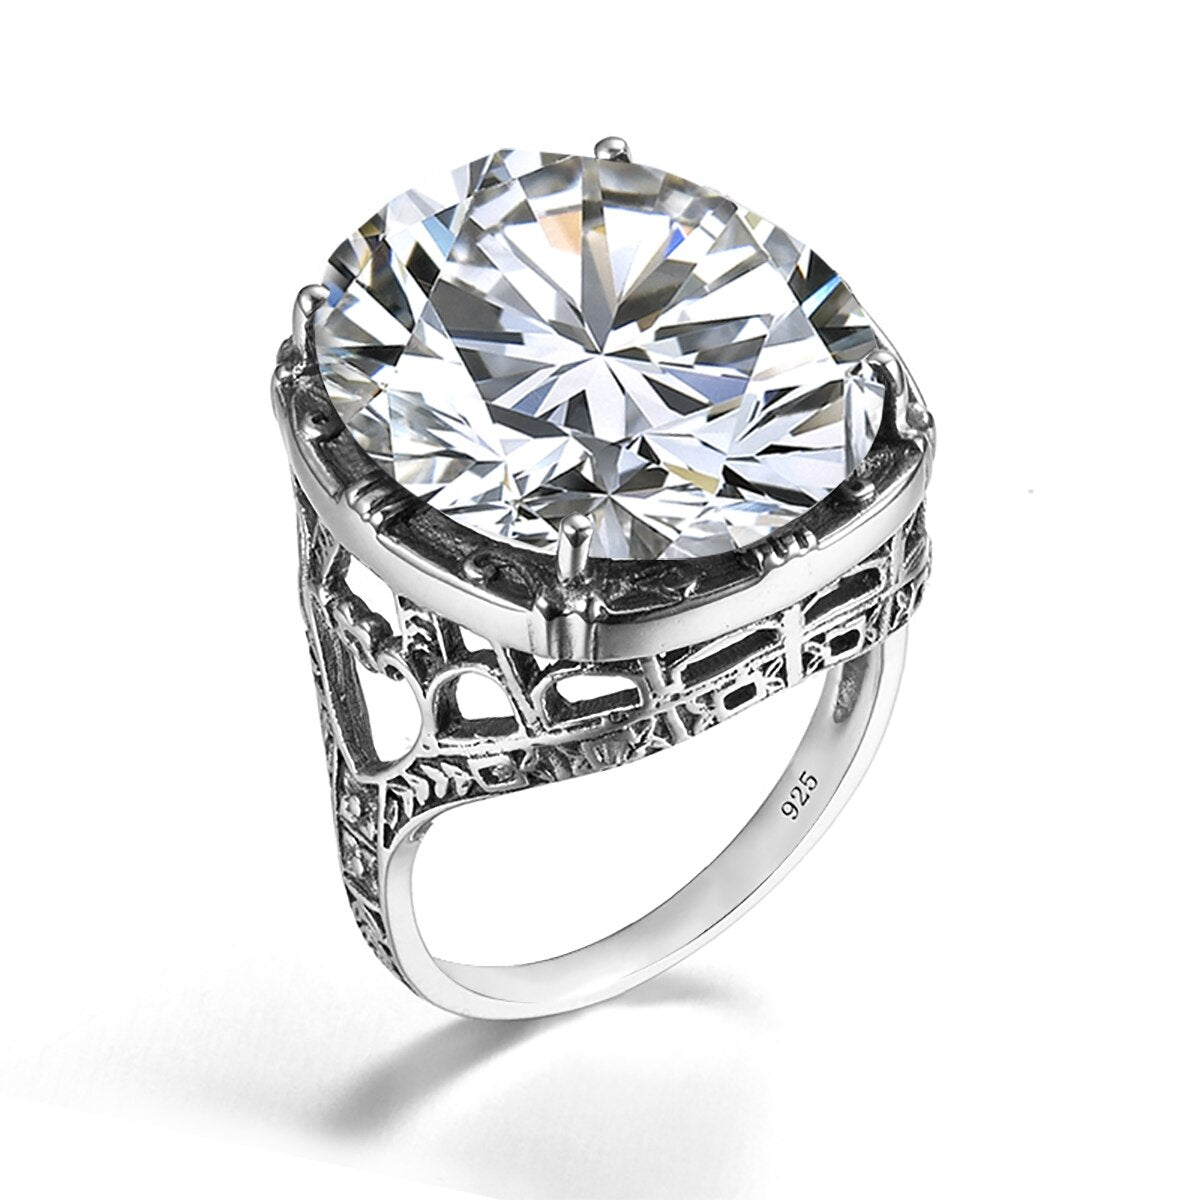 Real 925 Silver Women Amethyst Gemstone Ring Wedding Rings Handmade Processing Victorian Antique Jewelry Cubic Zirconia